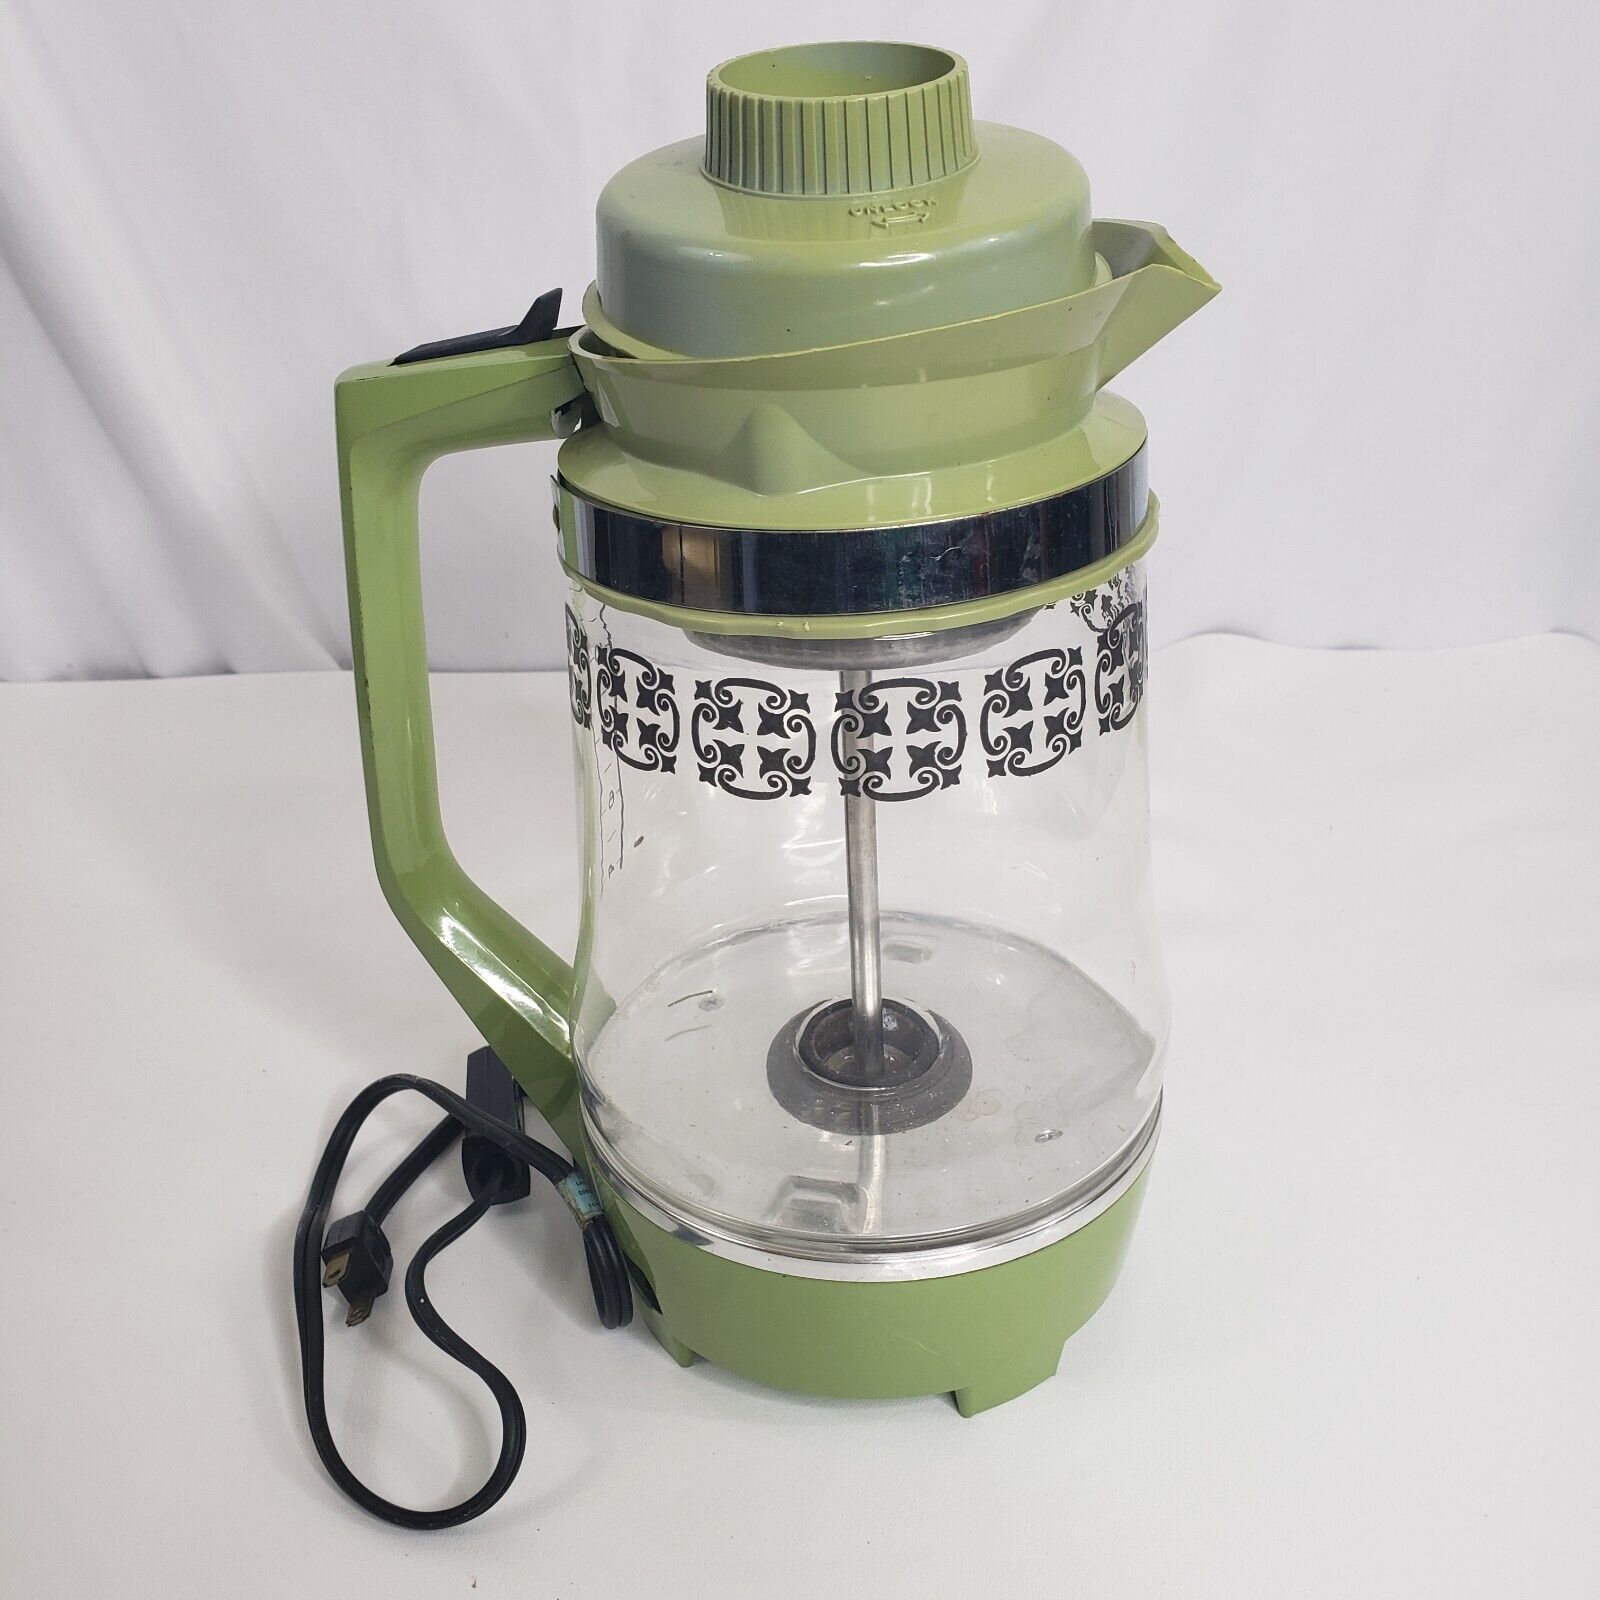 Vintage Mary Proctor Silex Avocado Green Glass Percolator Coffee Maker